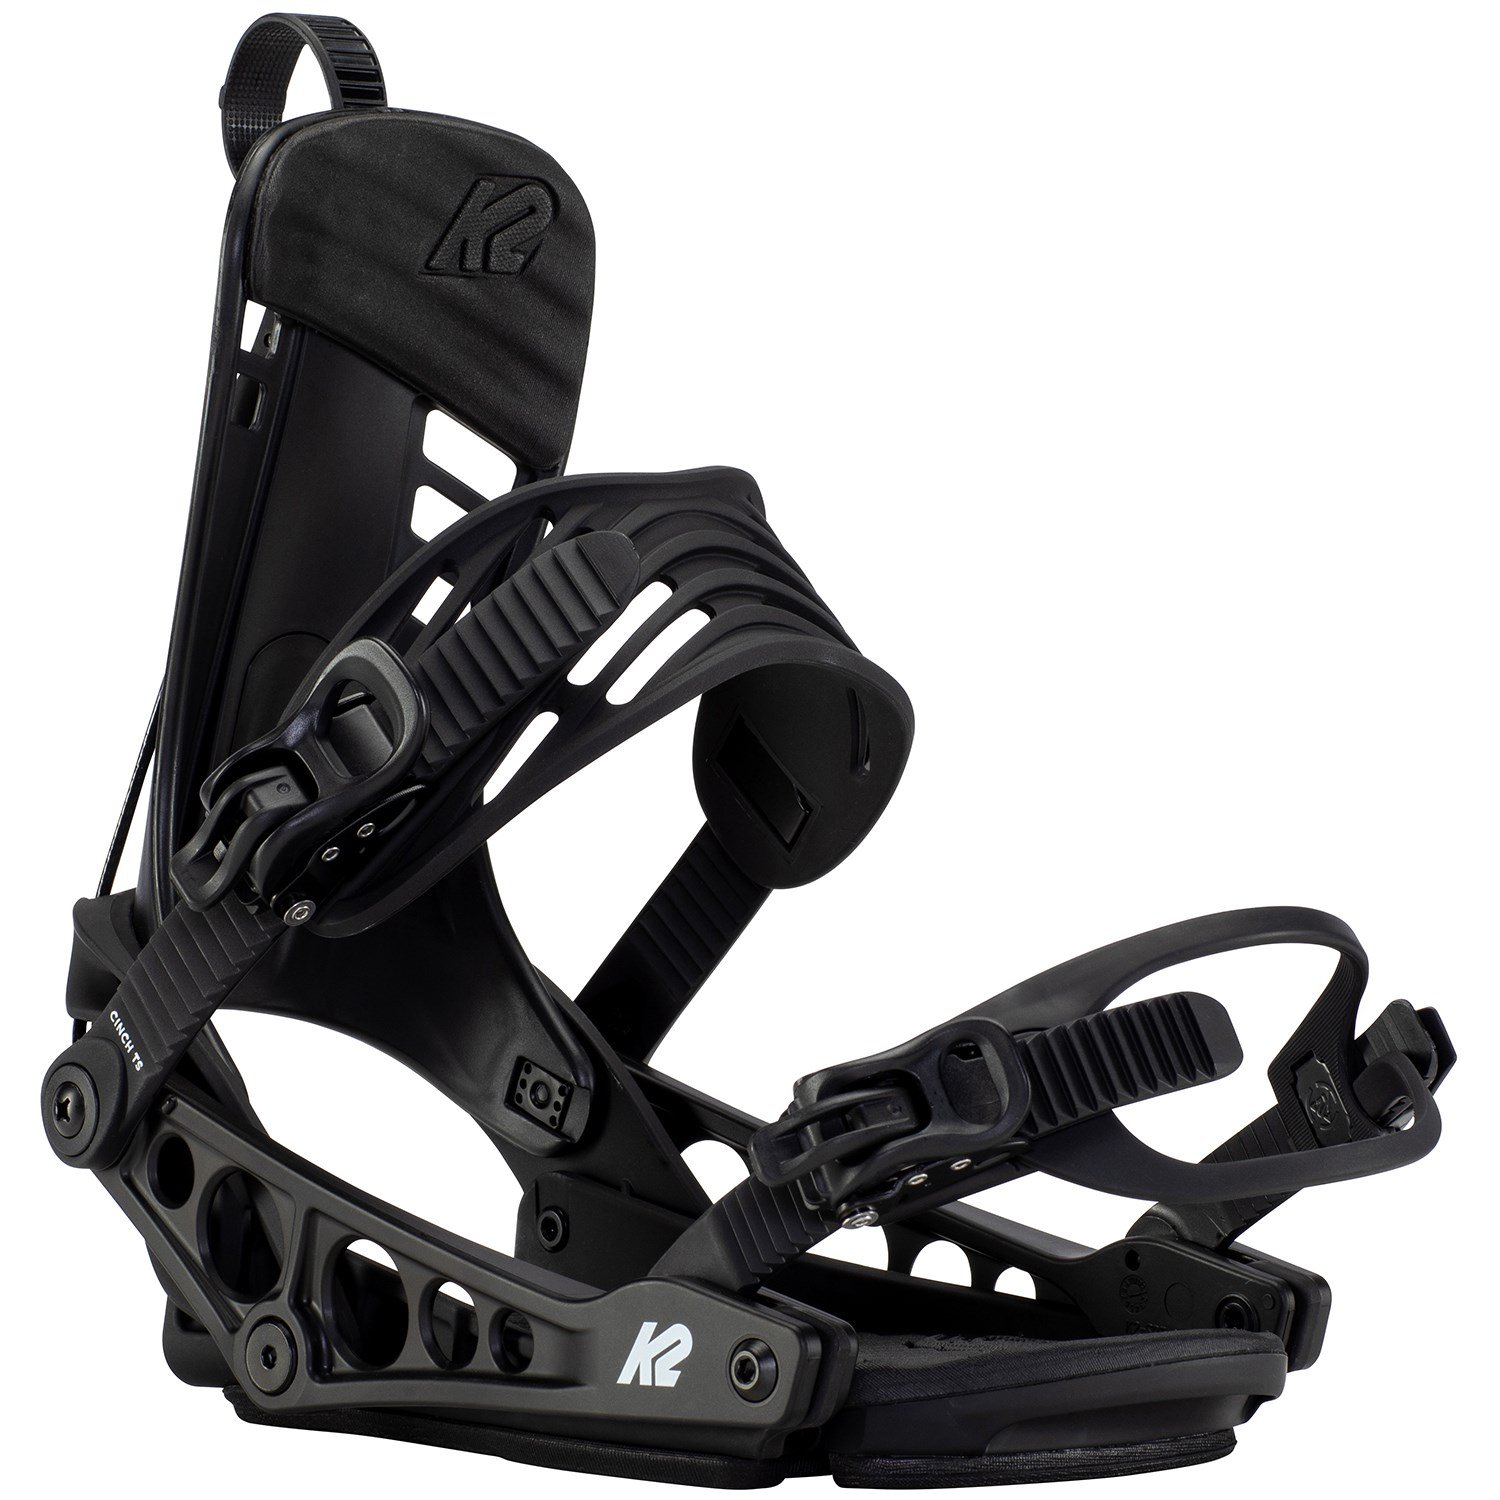 Buckles x 2 in Black Cinch Drag Ankle Ratchets K2 Snowboard Bindings 